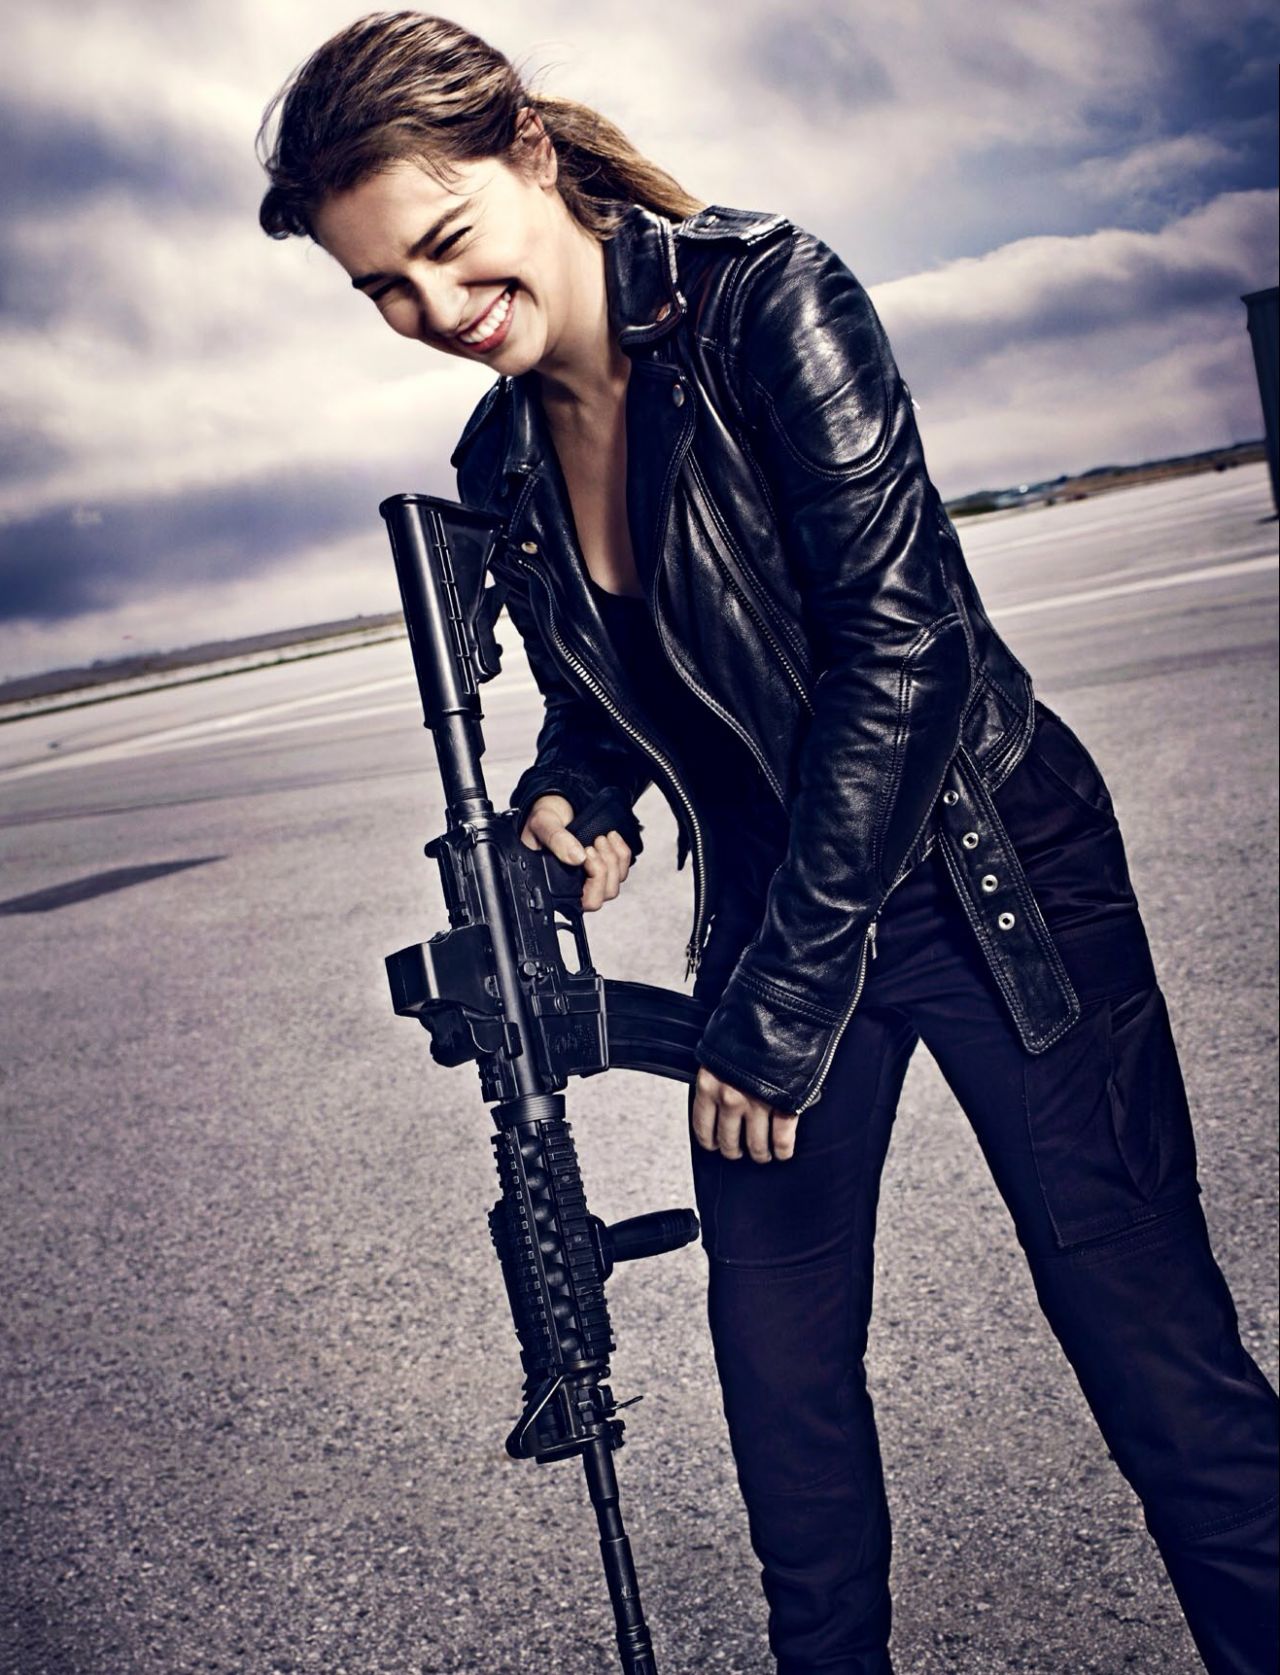 Emilia Clarke Photoshoot For Terminator Genisys Entertainment